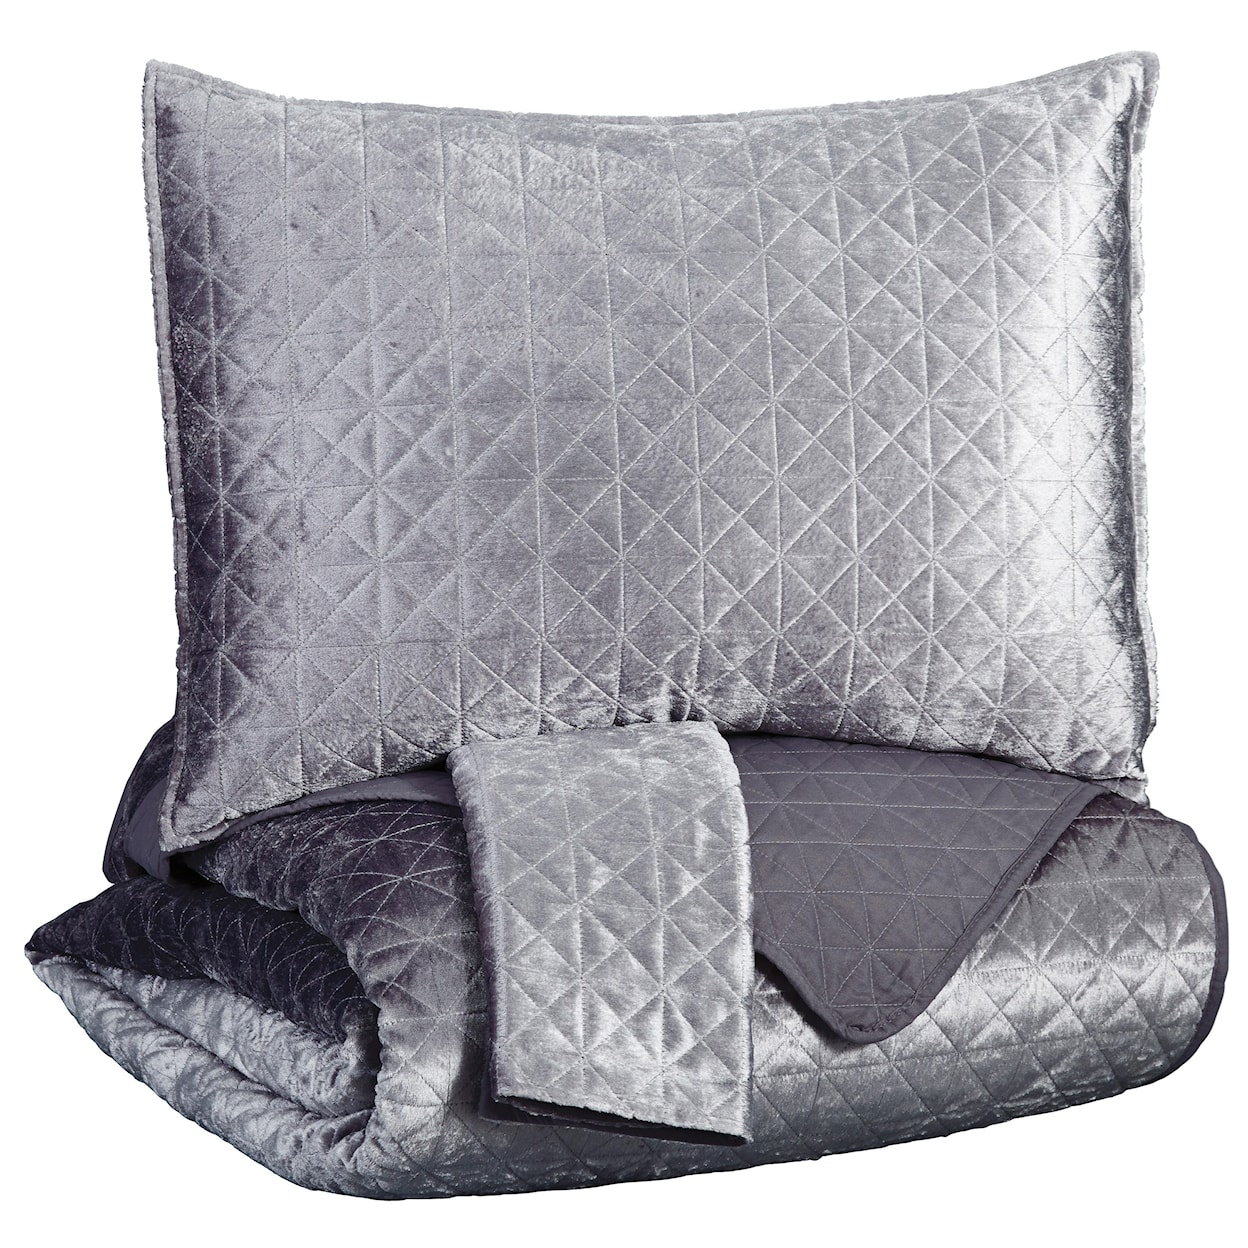 Ashley Furniture Signature Design Bedding Sets Queen Maryam Gray Coverlet Set